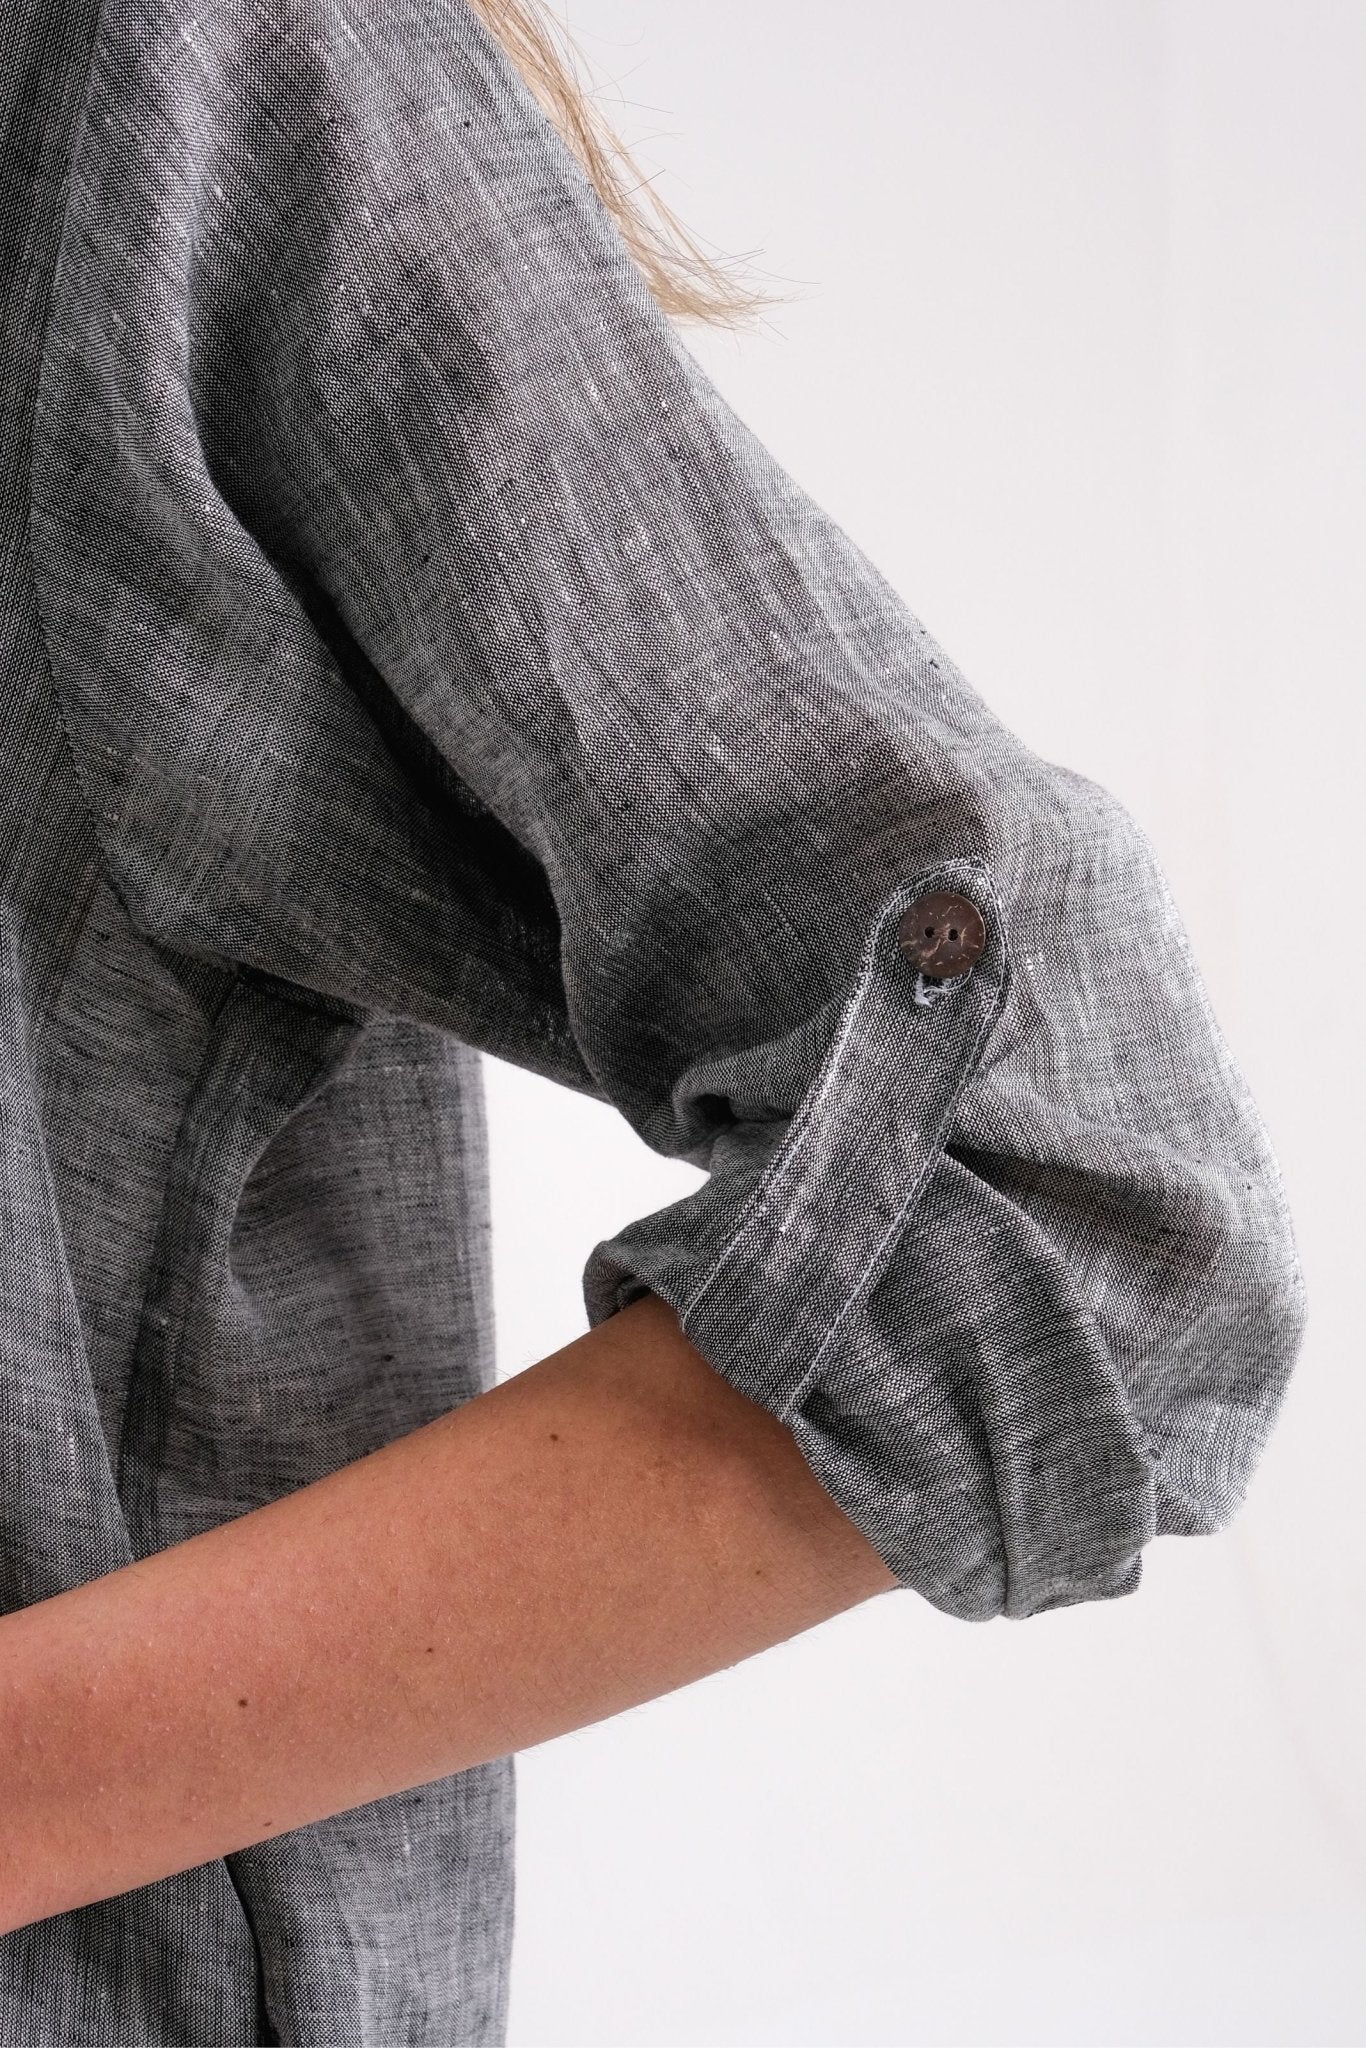 Linen Grey Shirt Dress With Pockets | Carla-Donnah-stride